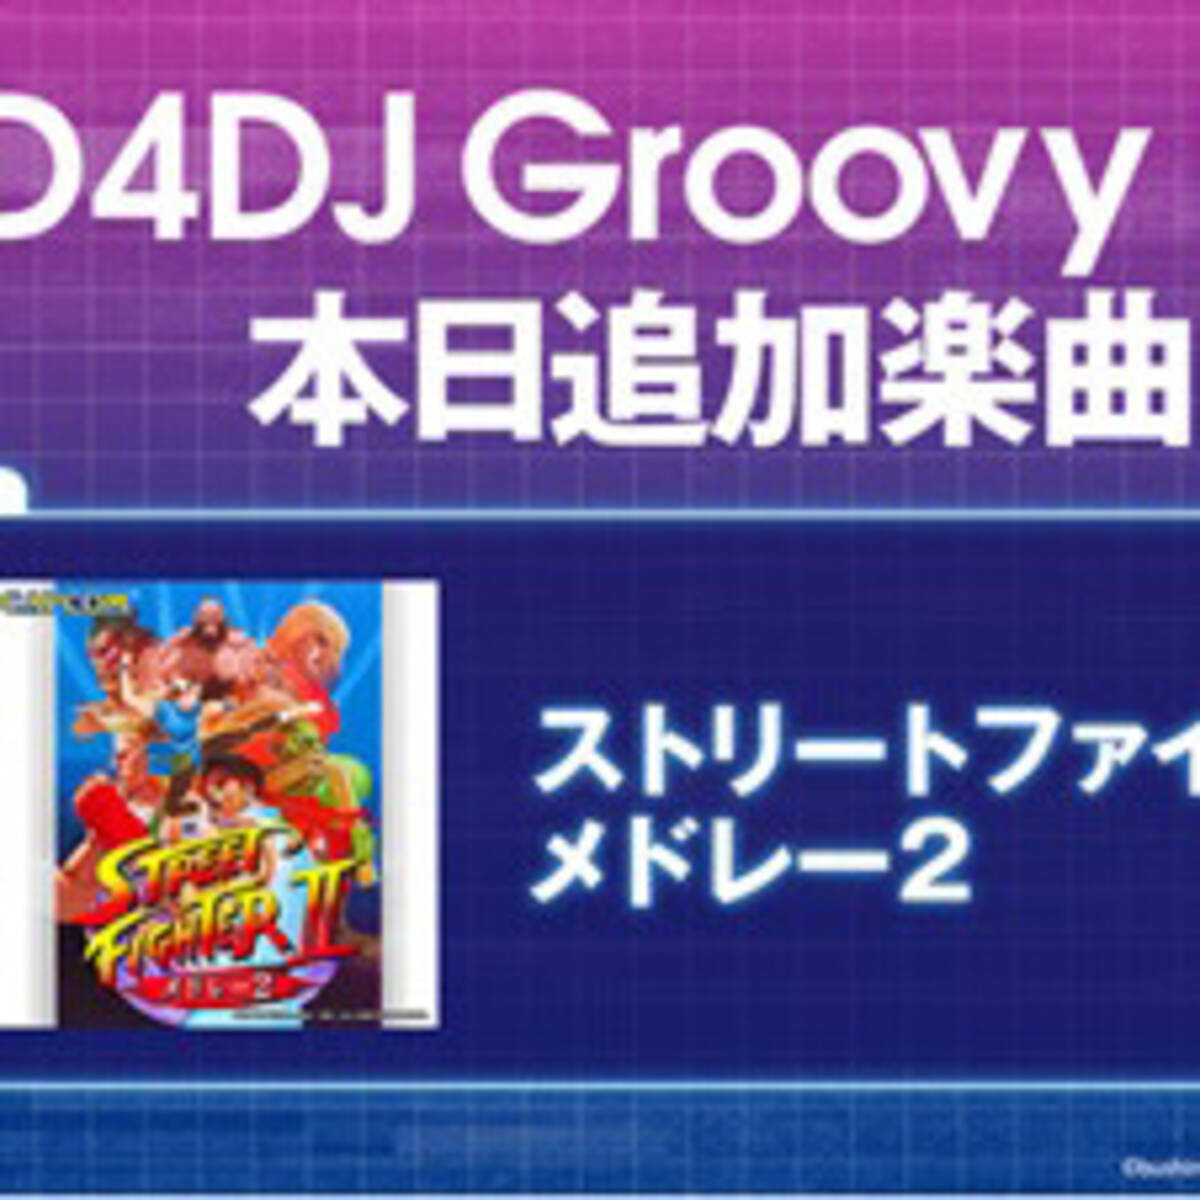 D4dj Groovy Mix にゲームbgm ストリートファイター メドレー2 が追加 21年4月14日 エキサイトニュース